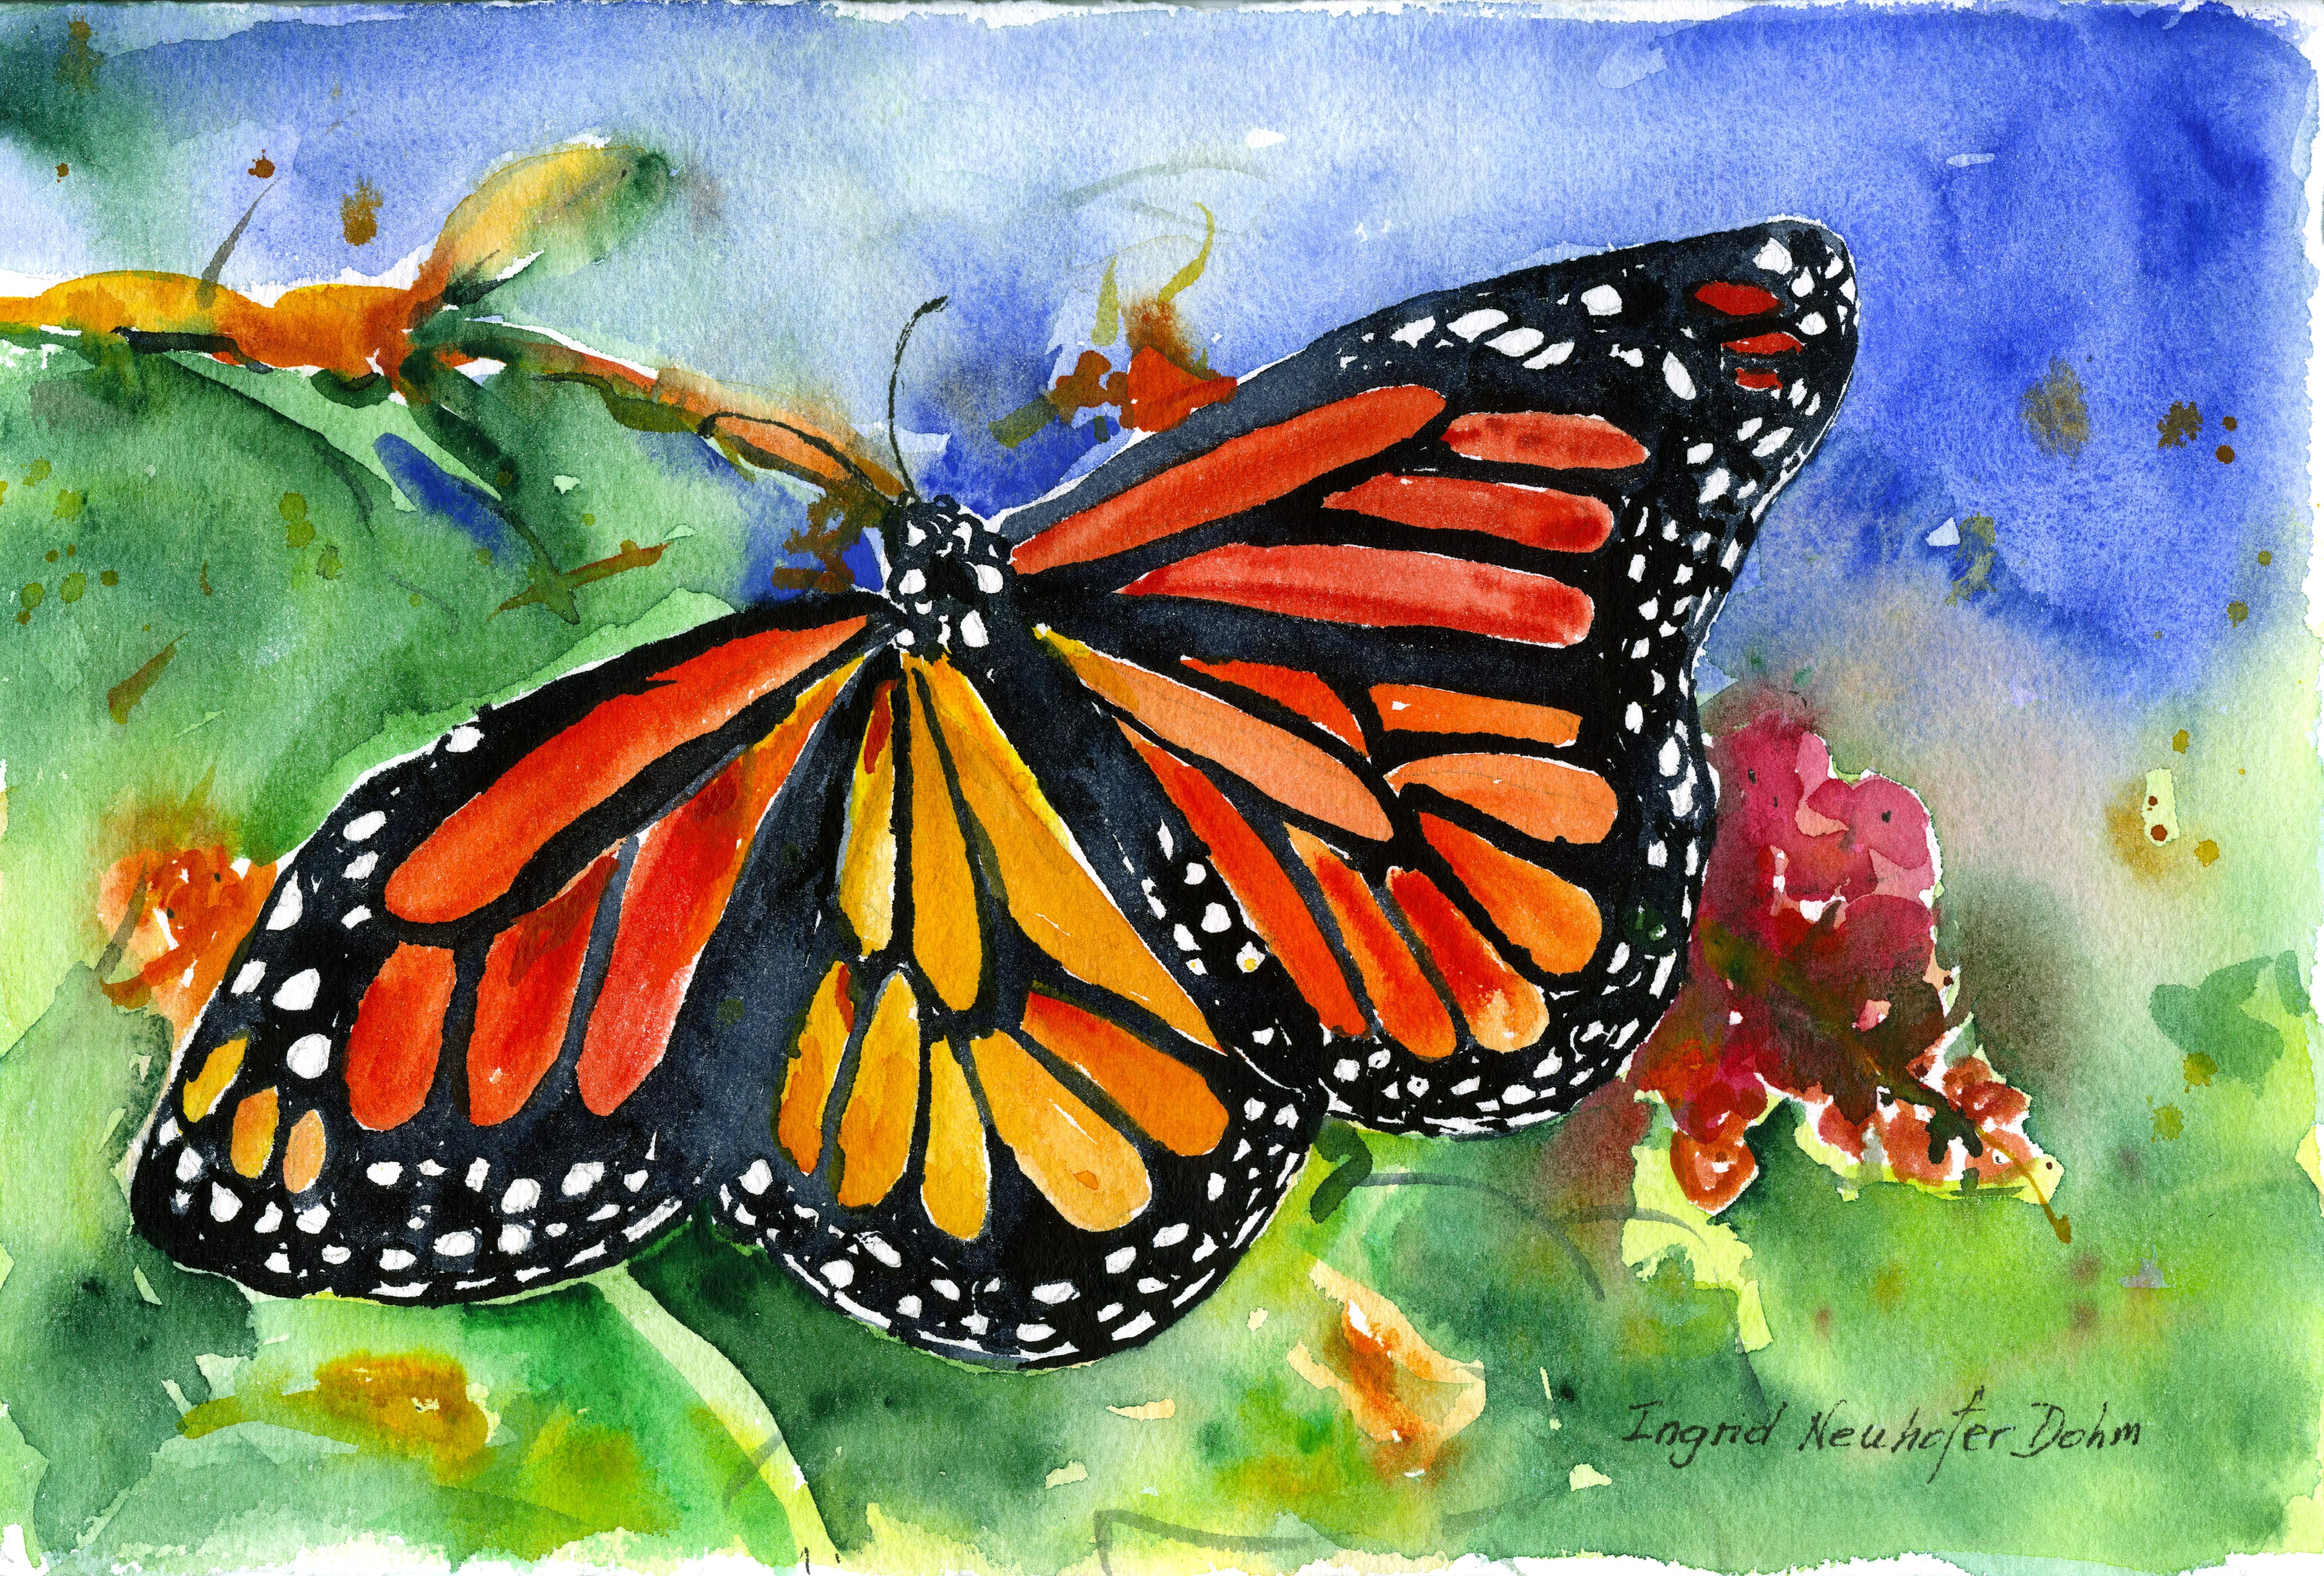 Ingrid Dohm Animal Art - Butterfly, Original Watercolor Painting, 2014